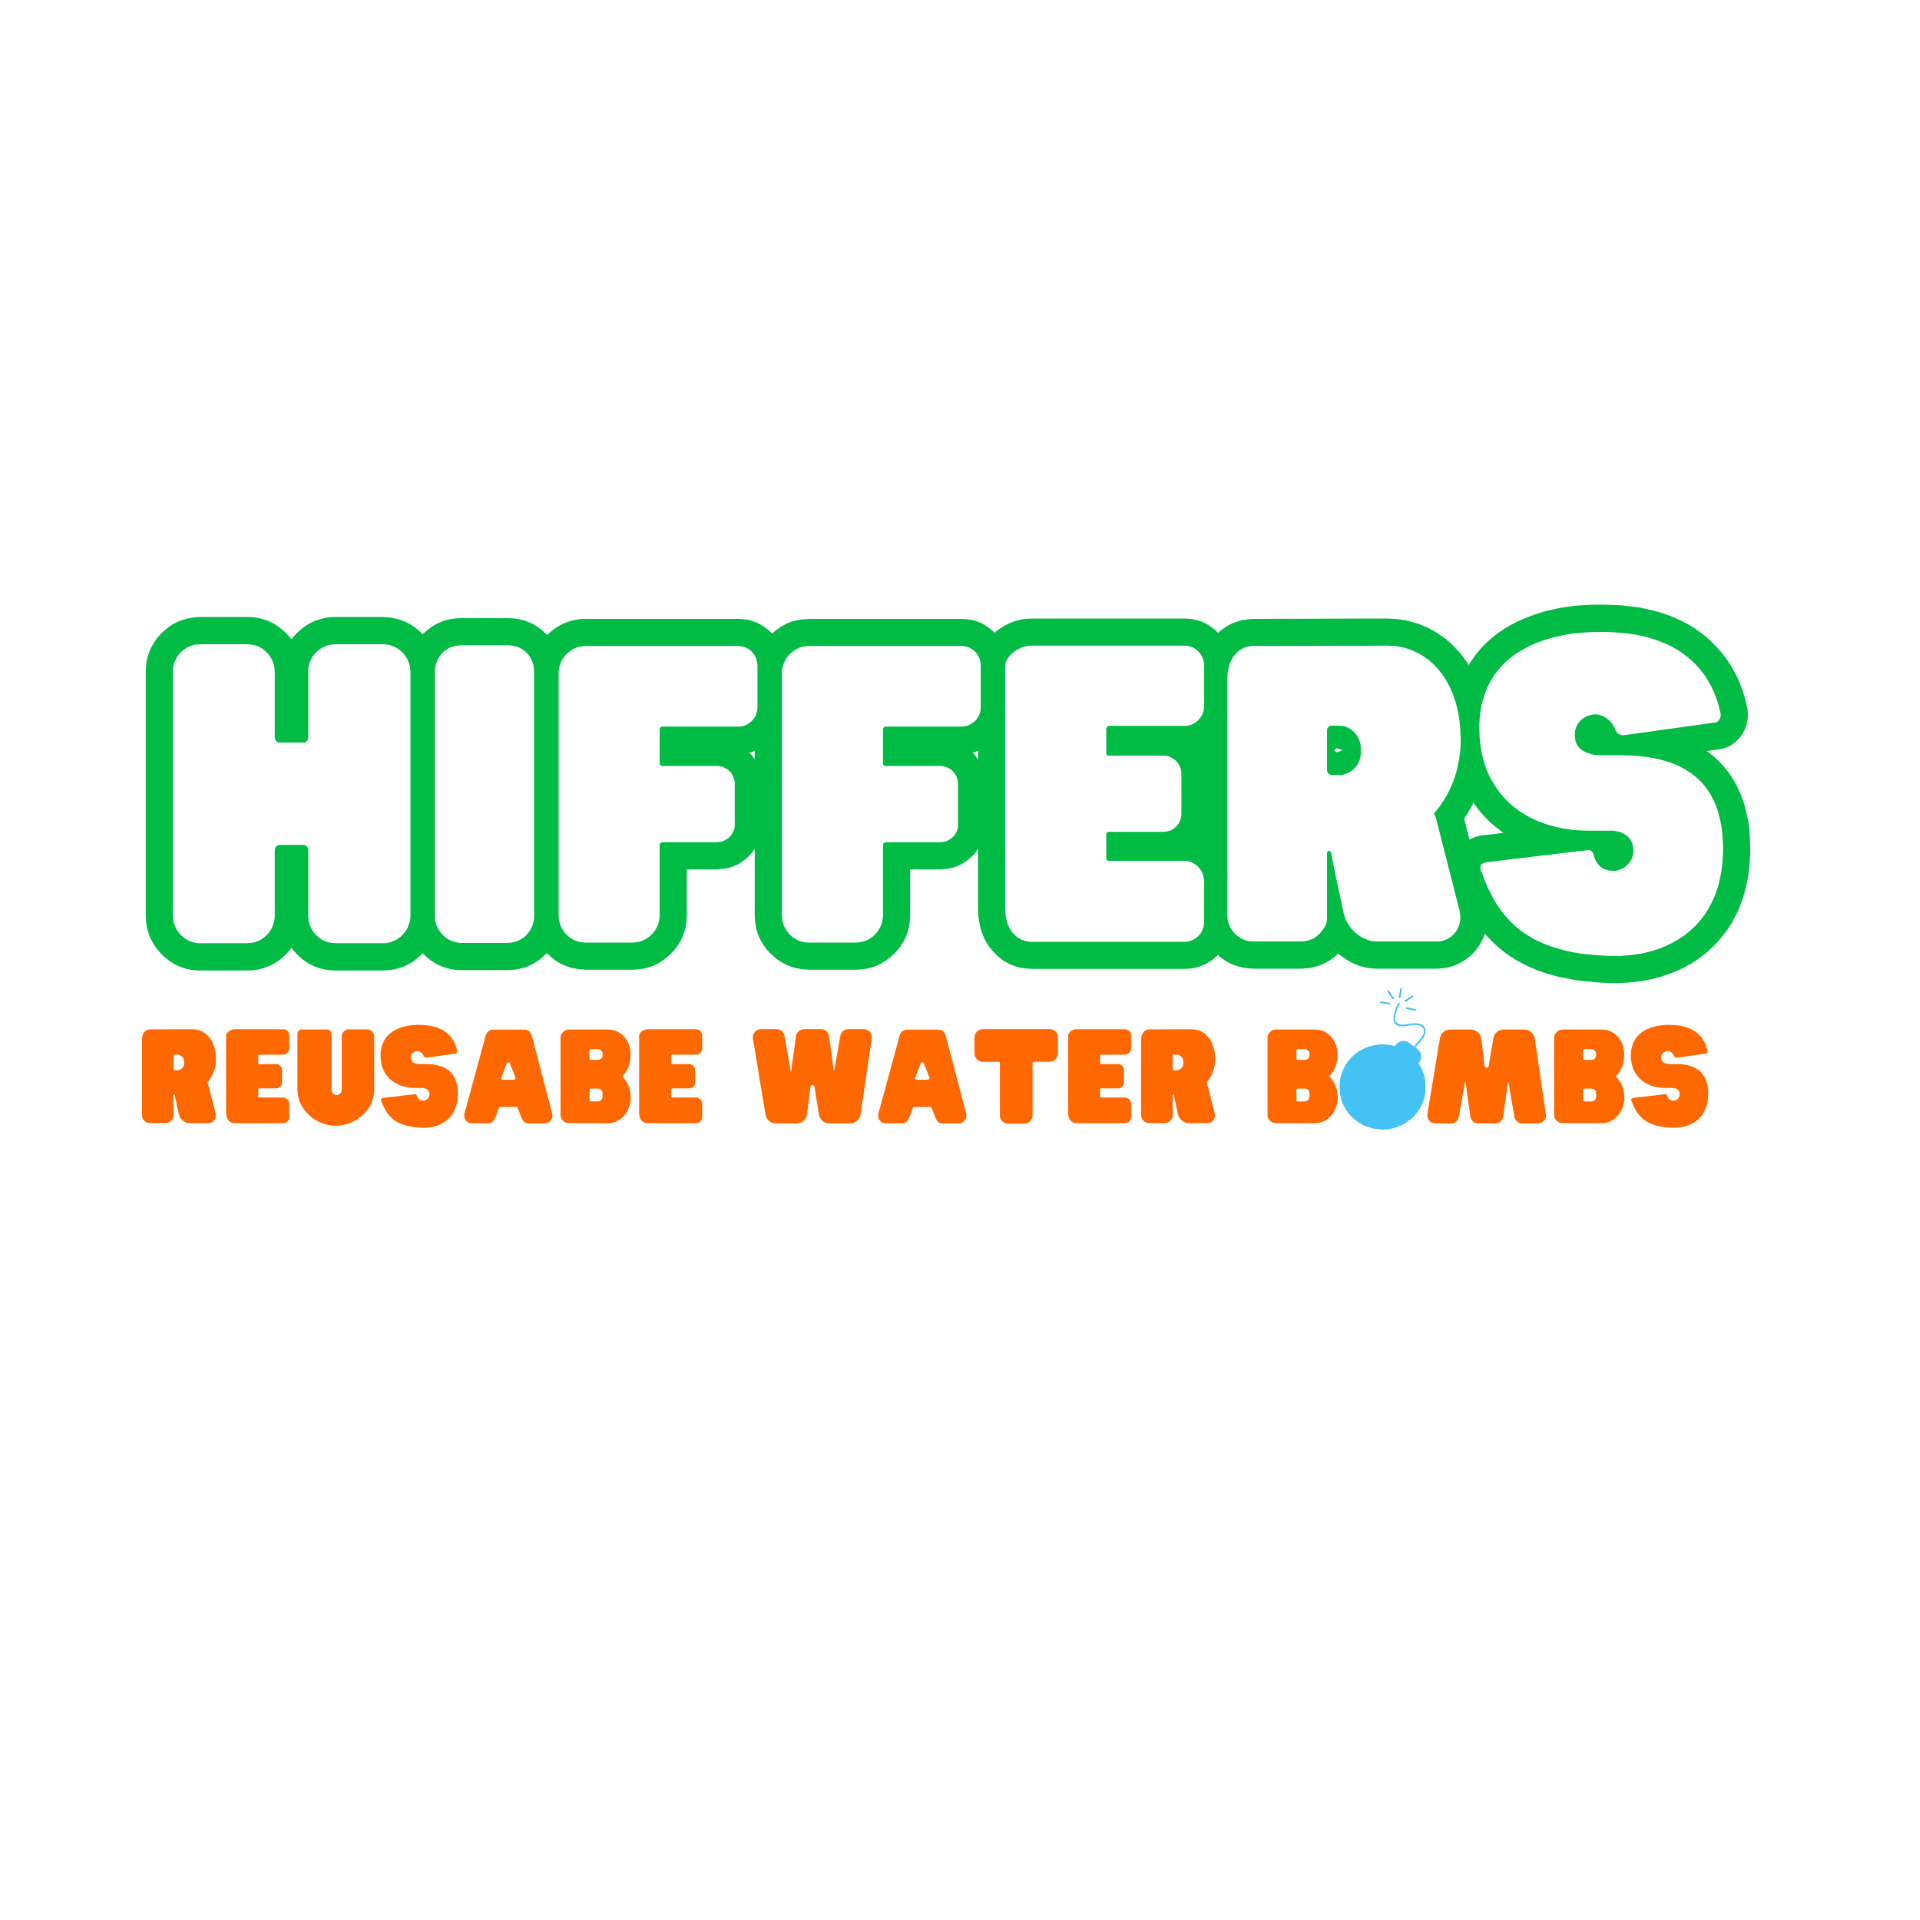 Hiffers